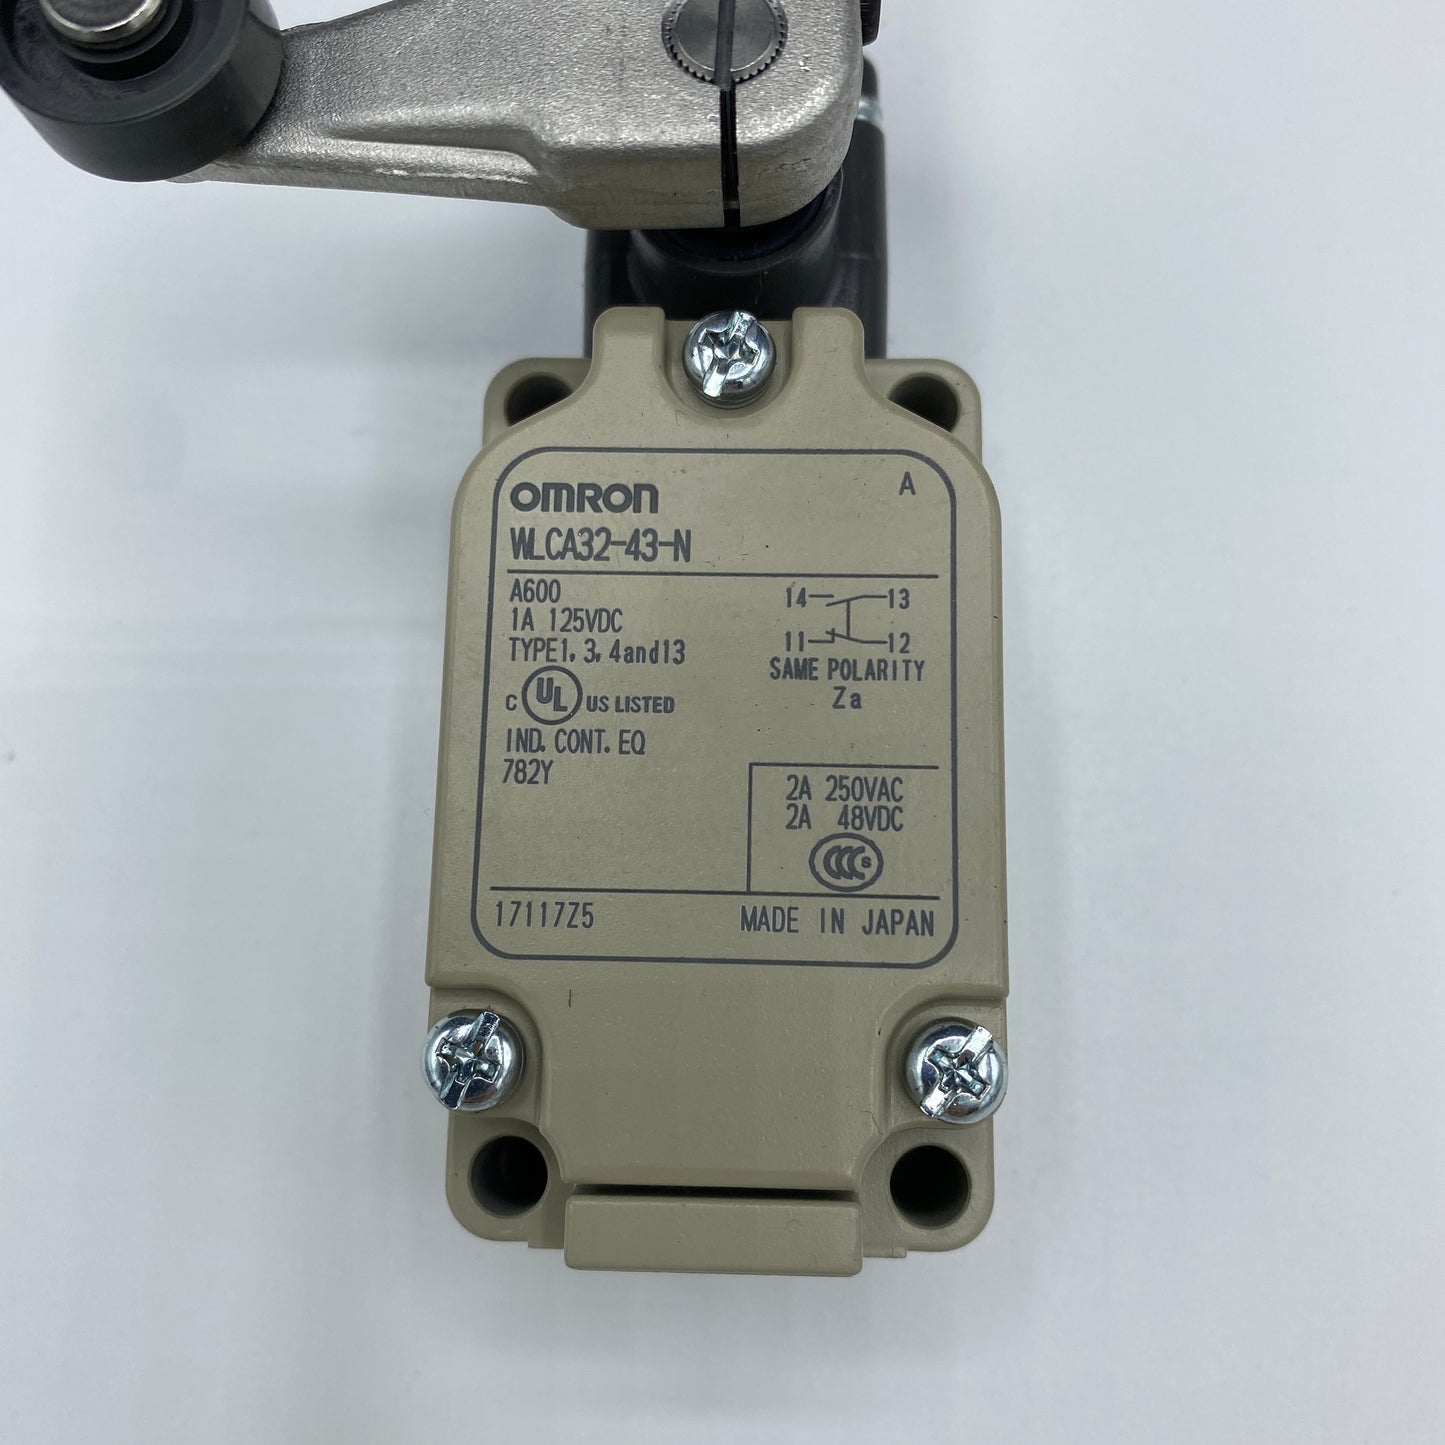 OMRON WLCA32-43-N Two-circuit limit switch